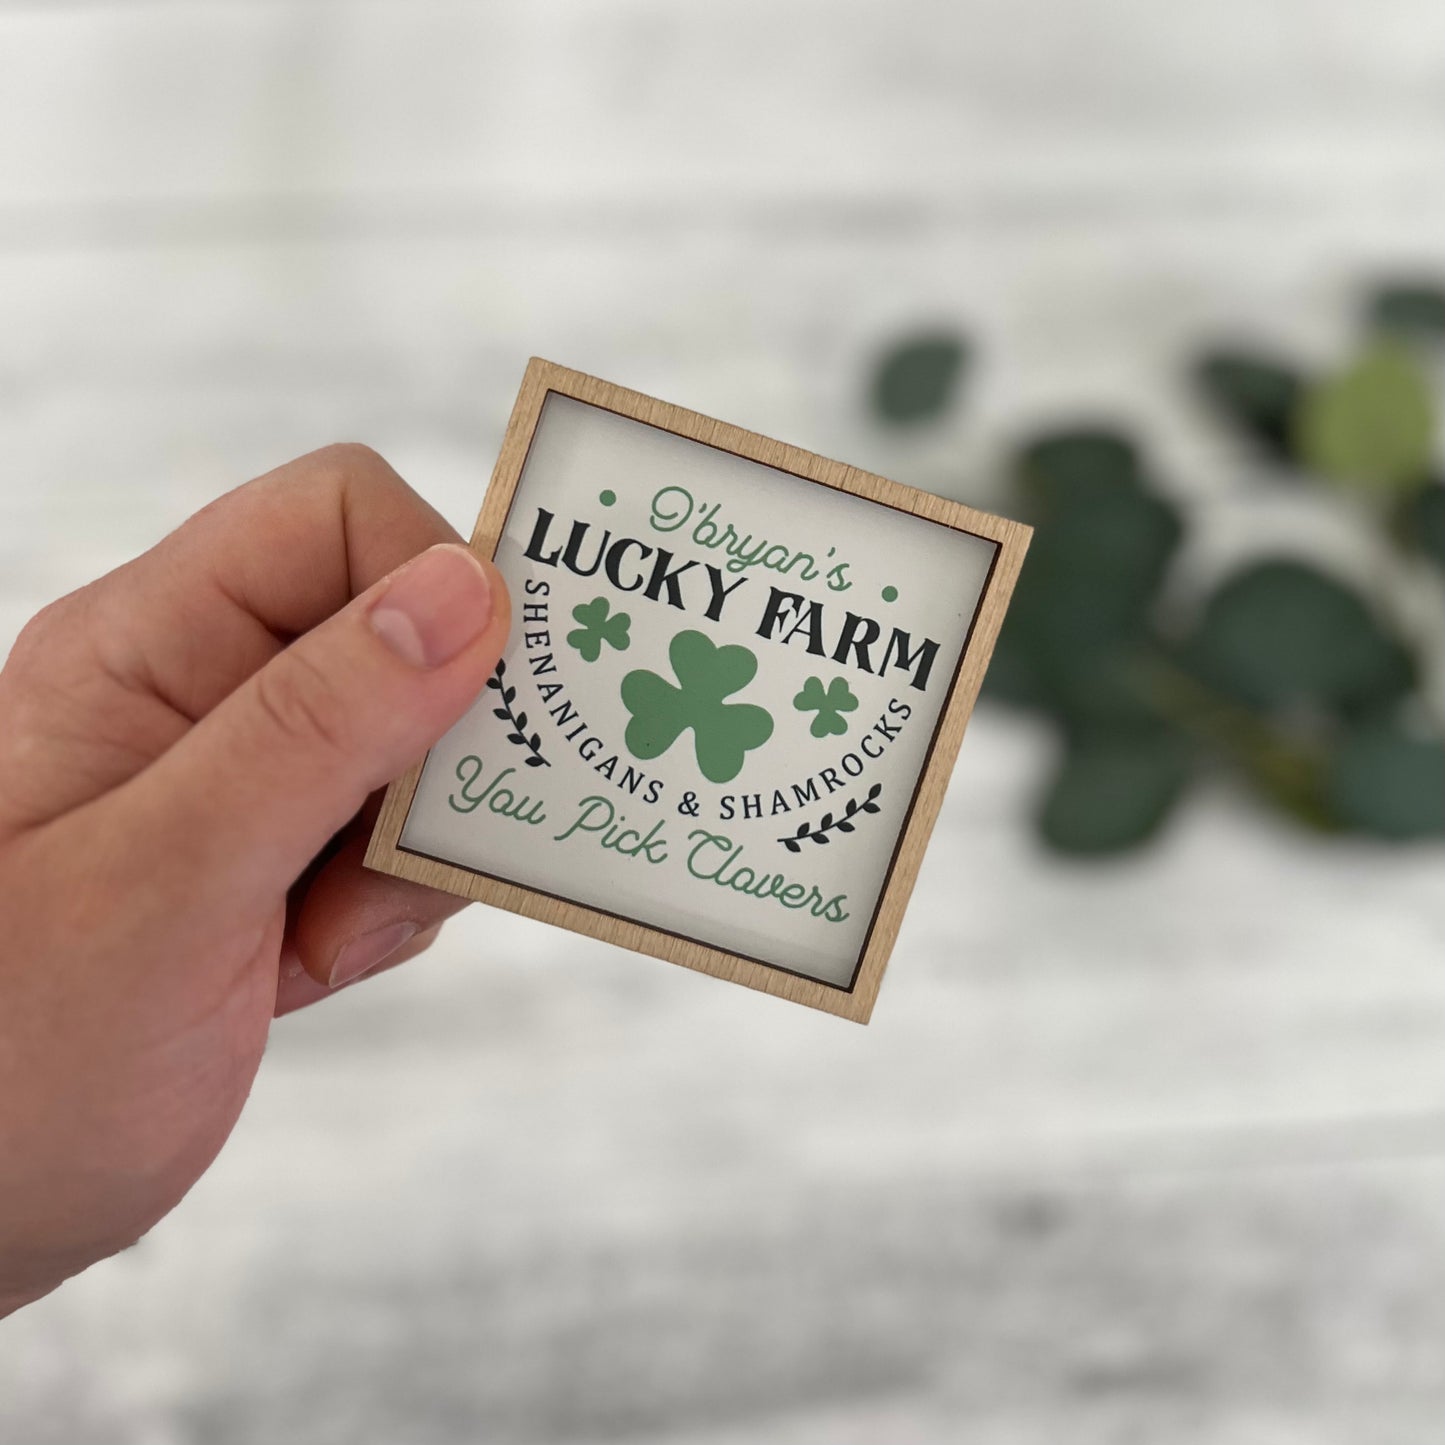 Mini Framed St. Patrick's Day Sign | O'bryan's Lucky Farm